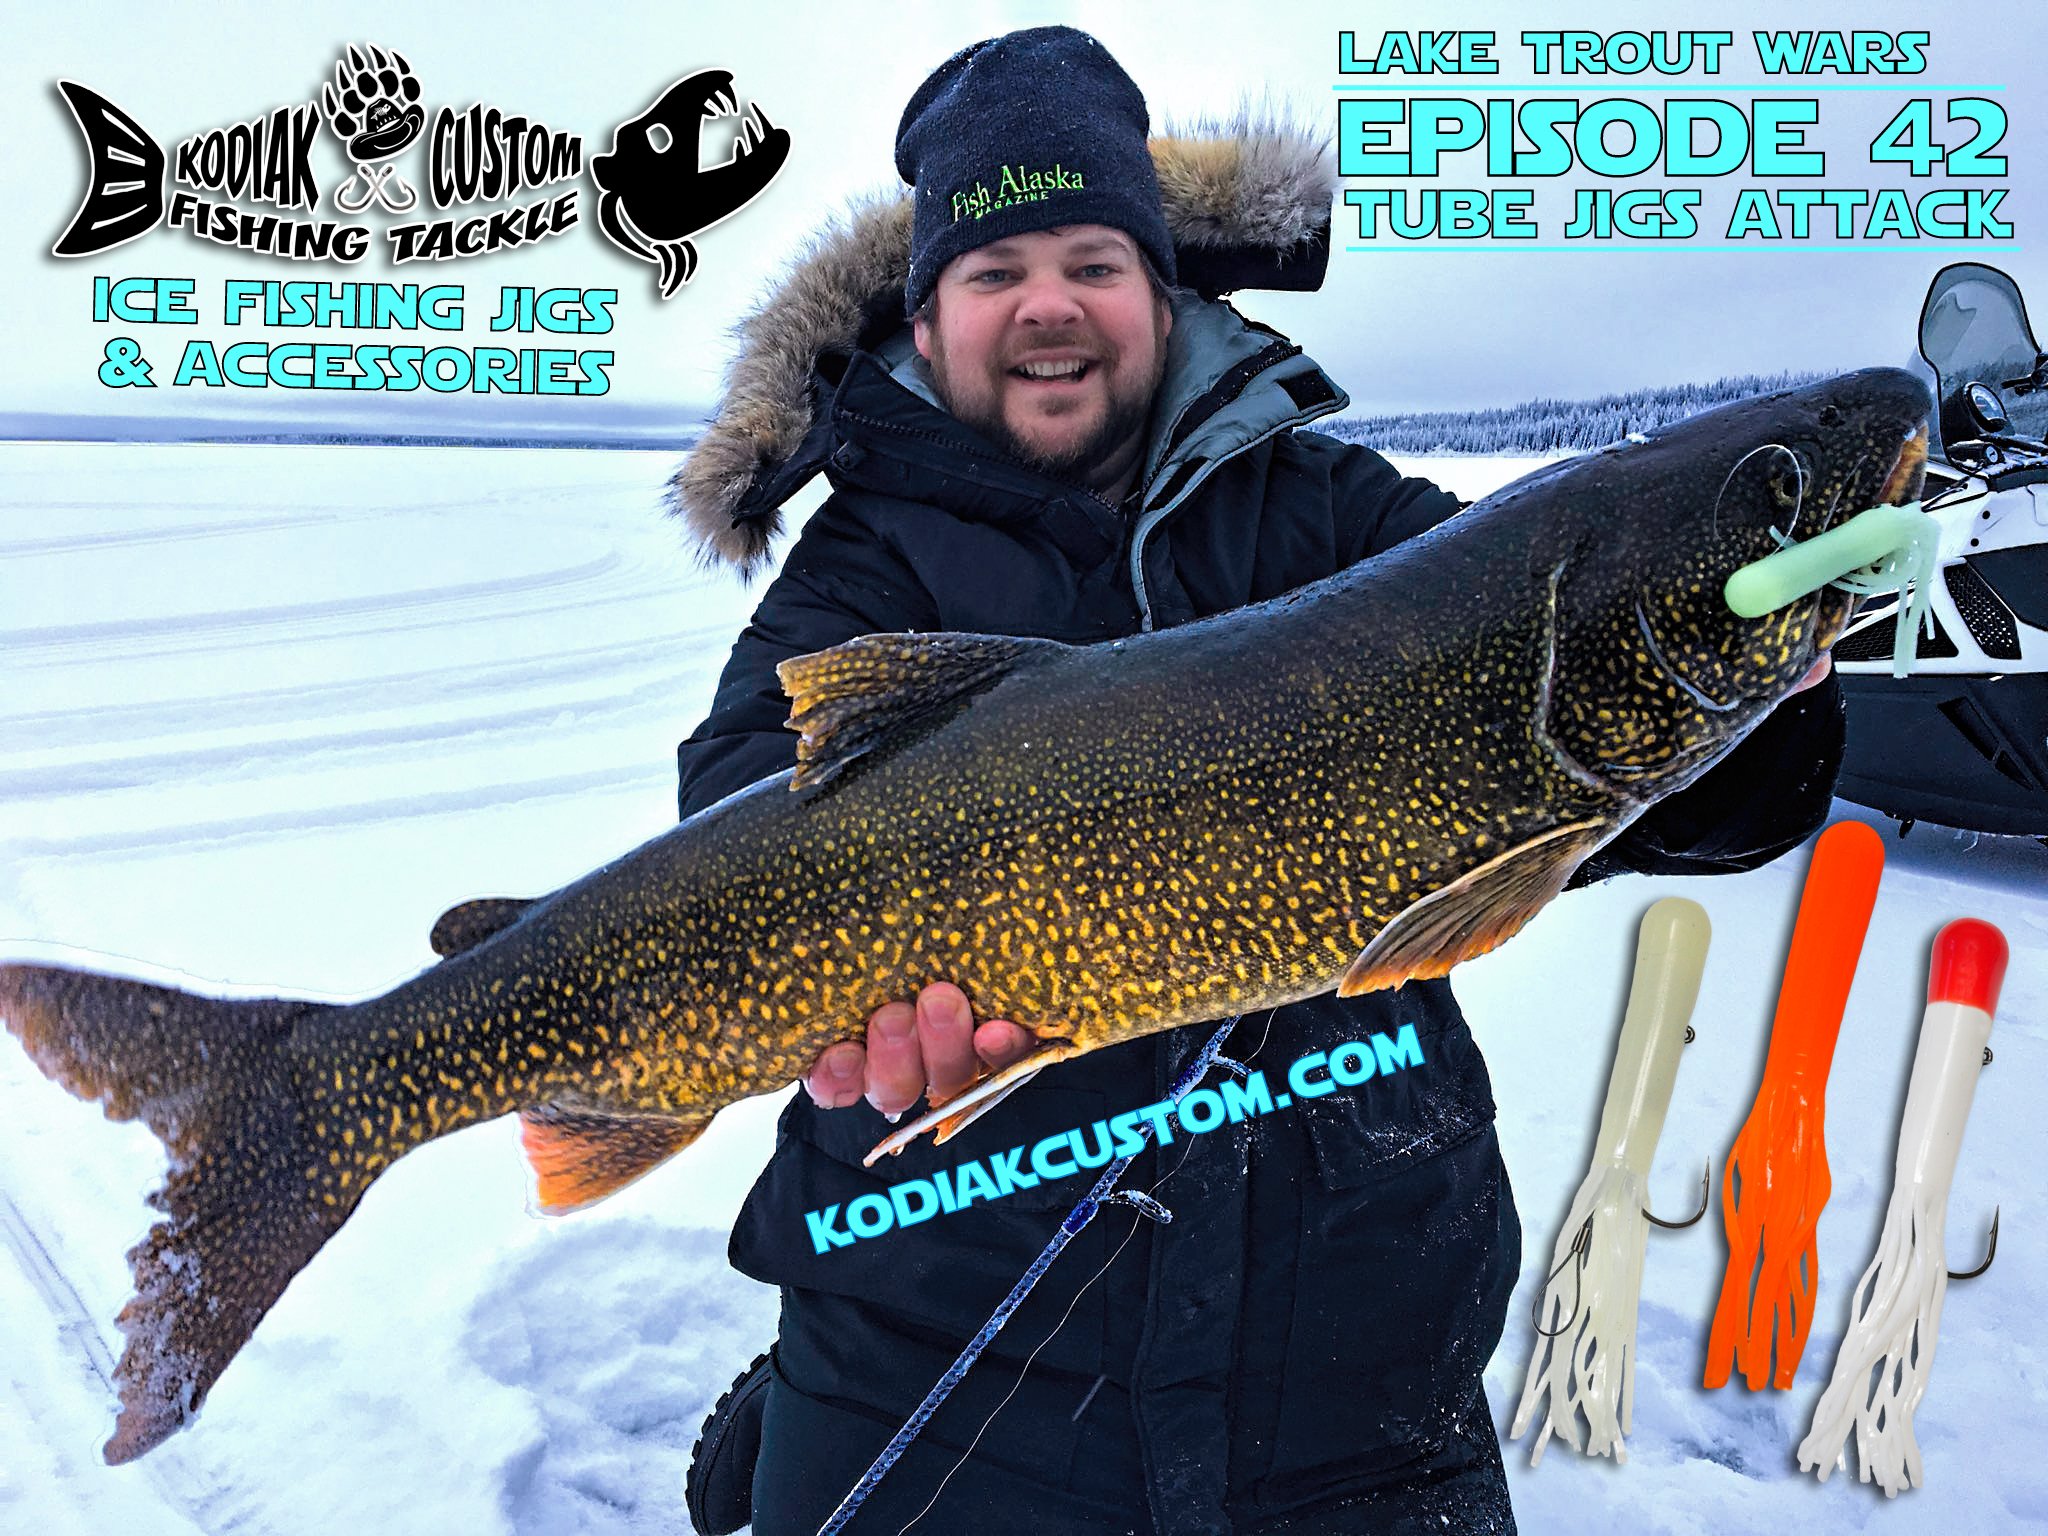 Kodiak Custom Fishing Tackle on X: @Kodiakcustom Lake Trout Wars